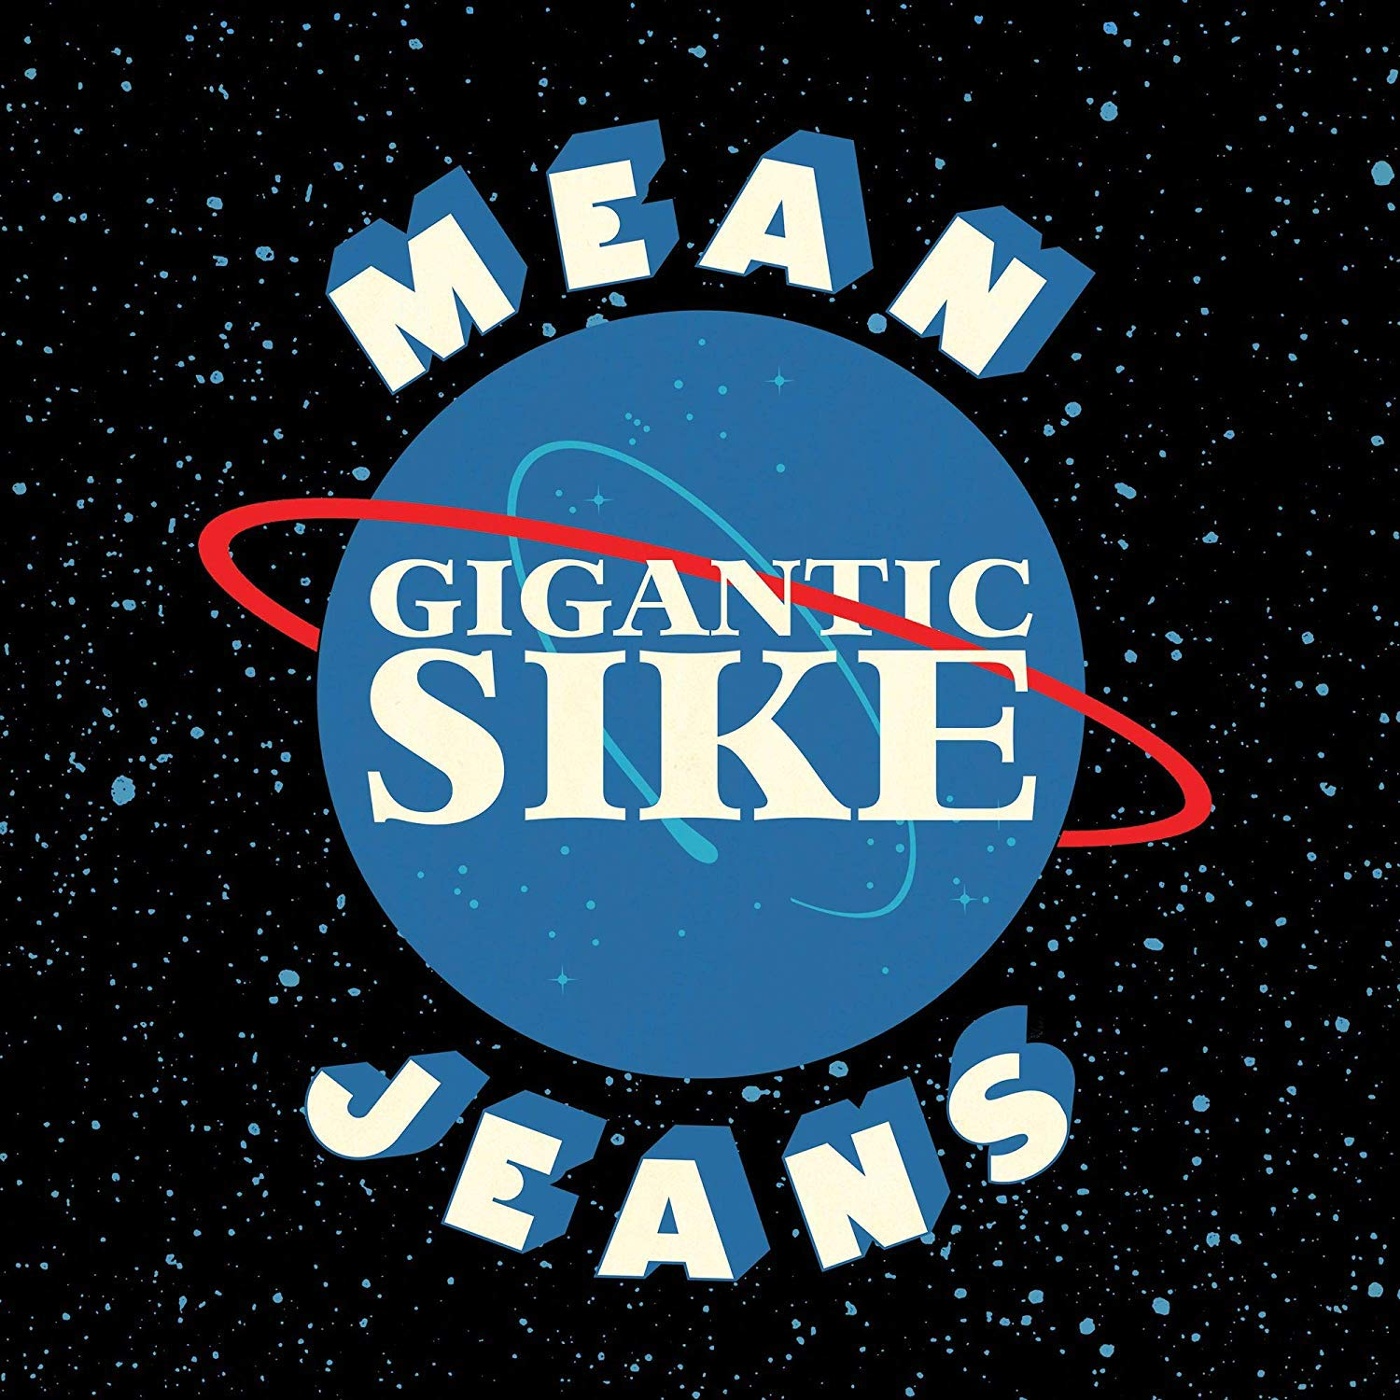 New jeans альбом. Альбом Нью джинс. Альбом Нью джинсы. New Jeans OMG альбом. New Jeans обложка альбома.